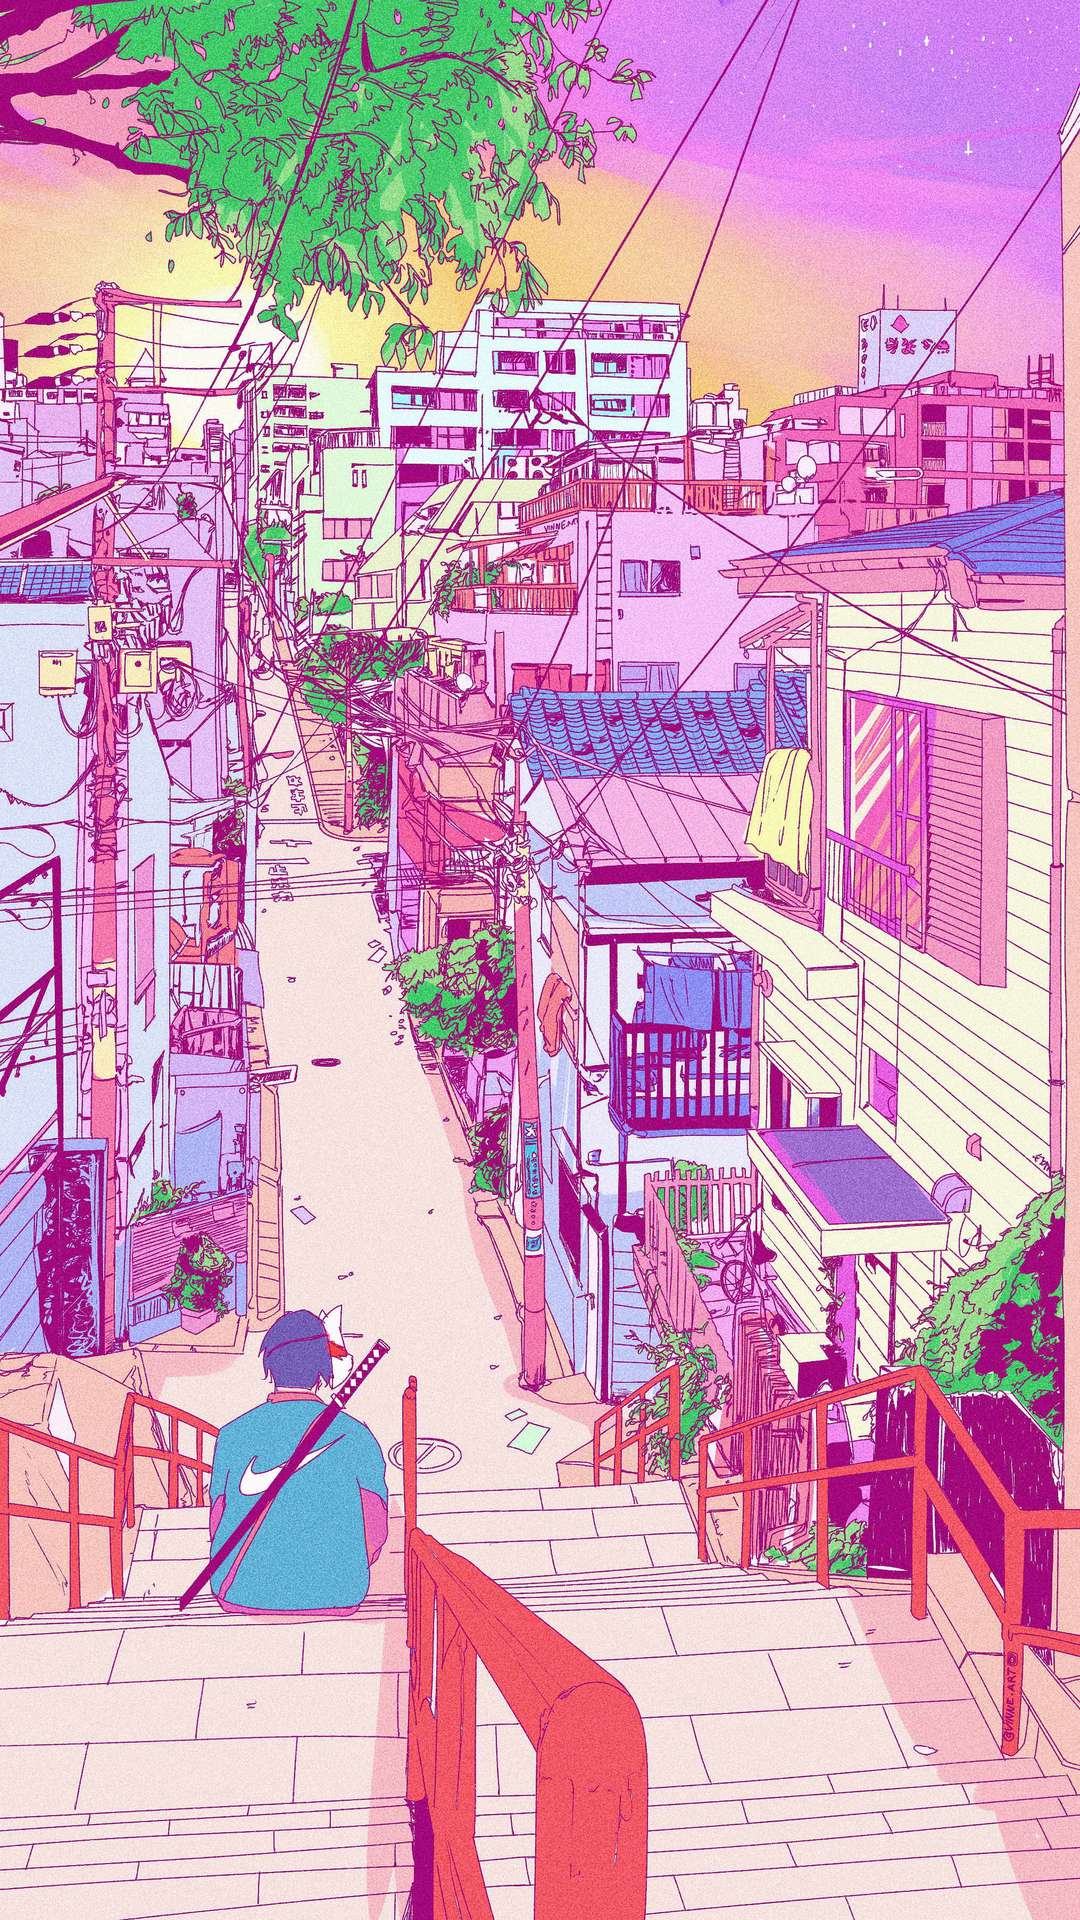 Aesthetic Anime Wallpaper Images  Free Download on Freepik